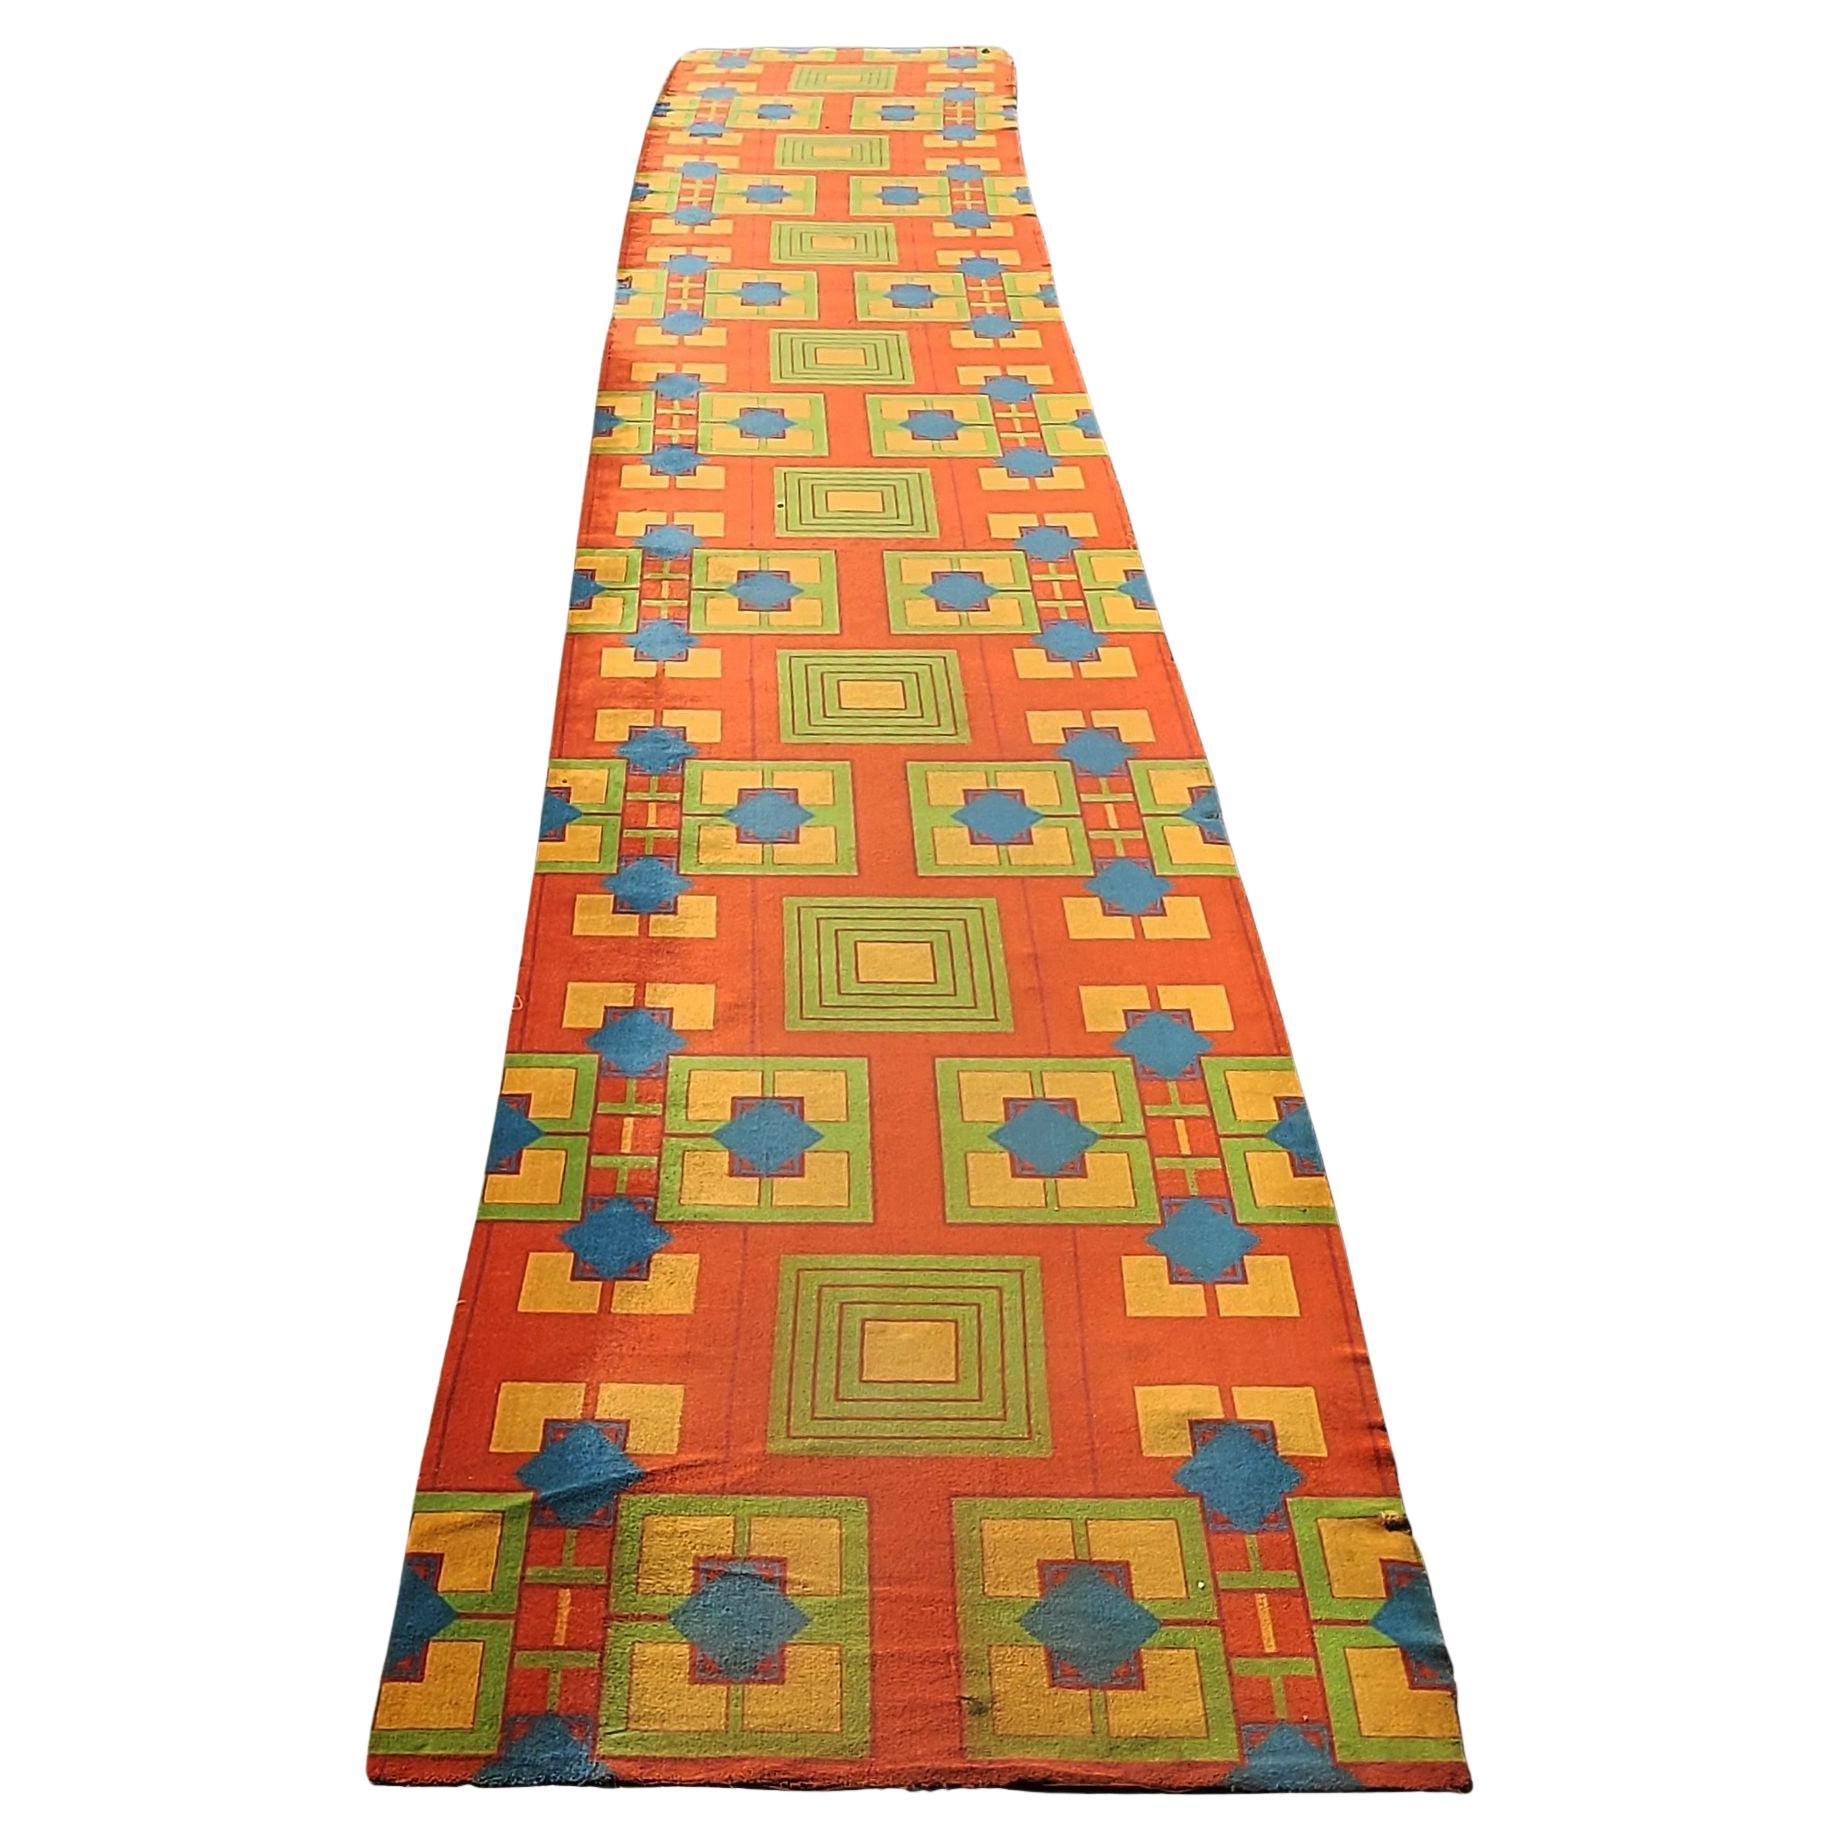 Original 6' 5" X 37' Art-Déco-Revival-Teppich aus dem Arizona Biltmore